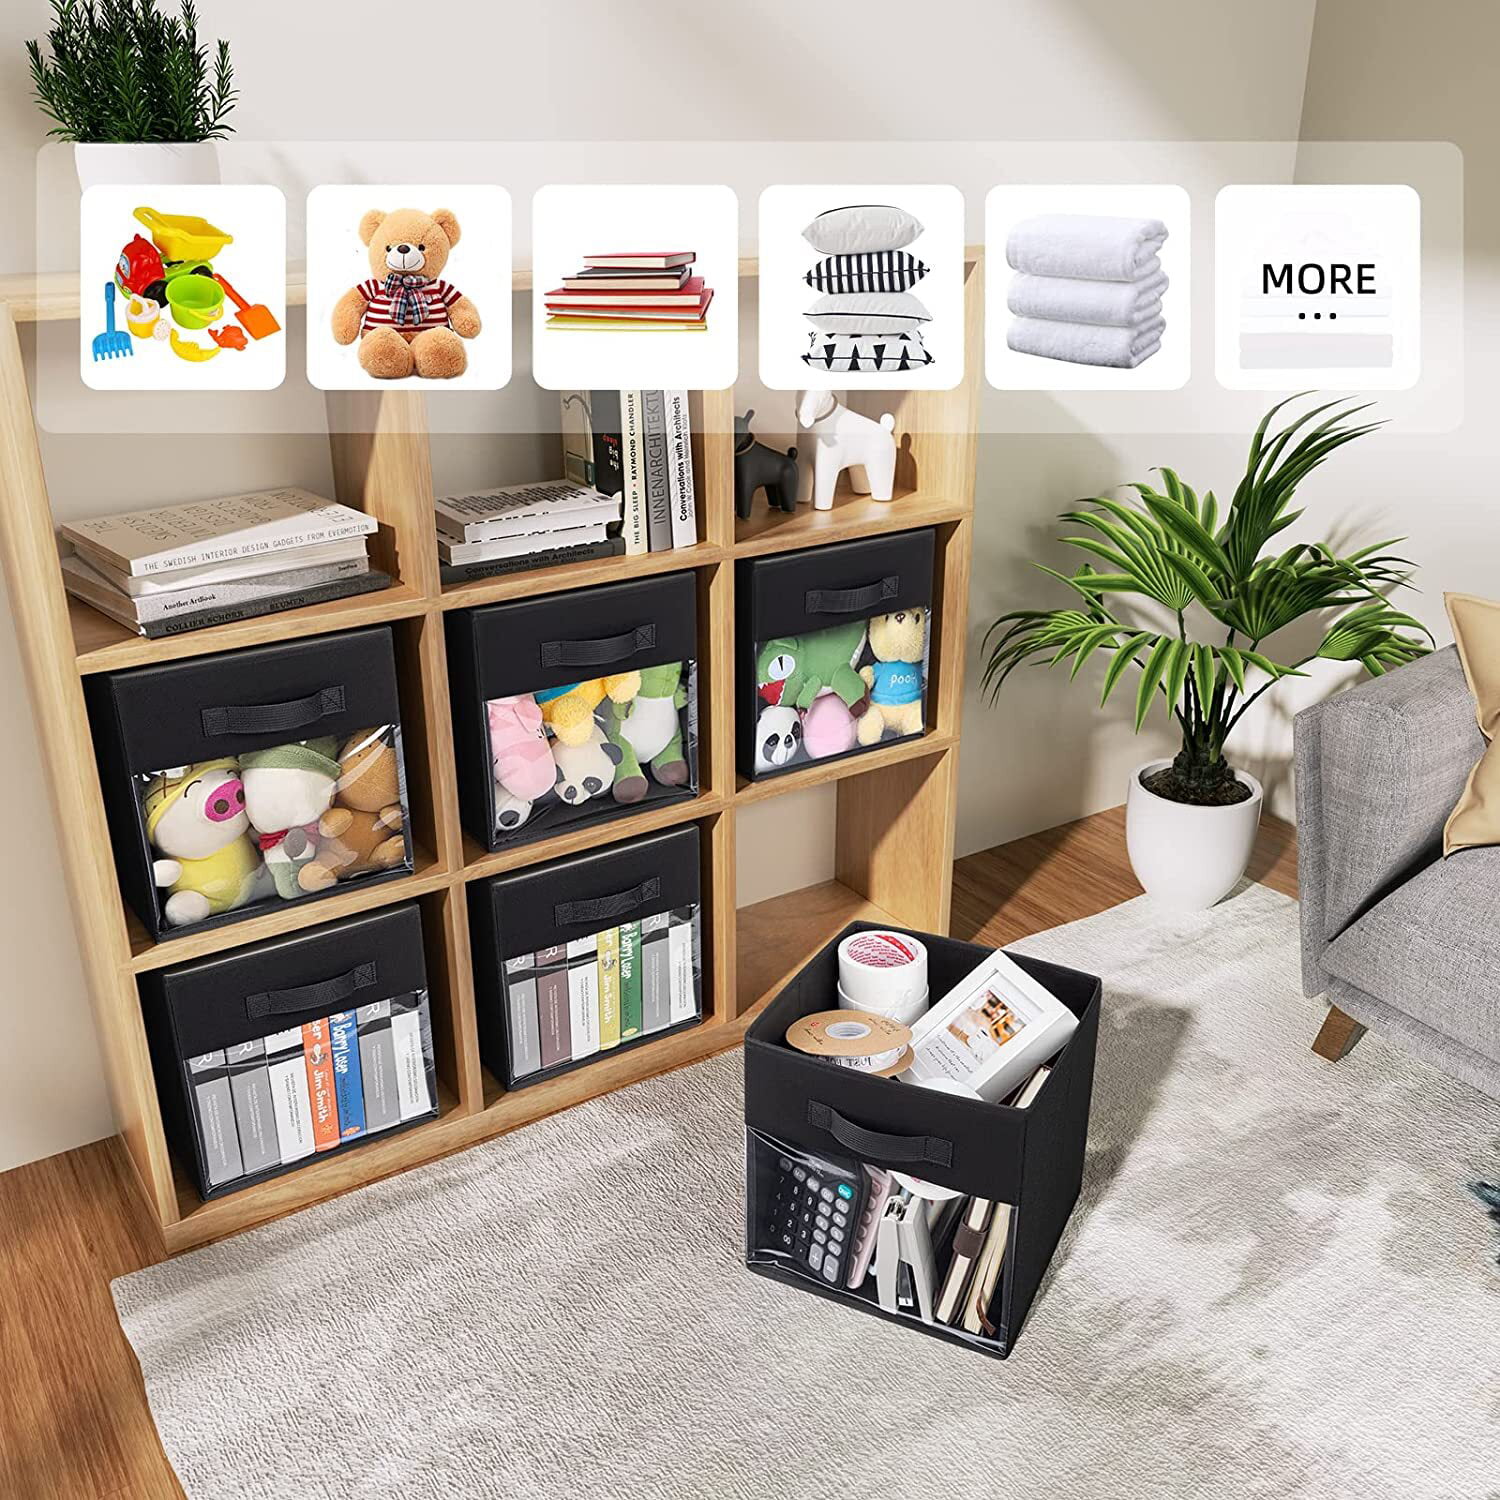 DIMJ Storage Bins with Lids, 3 Pcs Large Foldable Fabric Closet Organizer  Storage Bins with Handle, Cube Storage Basket Box for Shelf, Bedroom,  Office, Nursery, Toys, Clothes, Books, Light Gray 